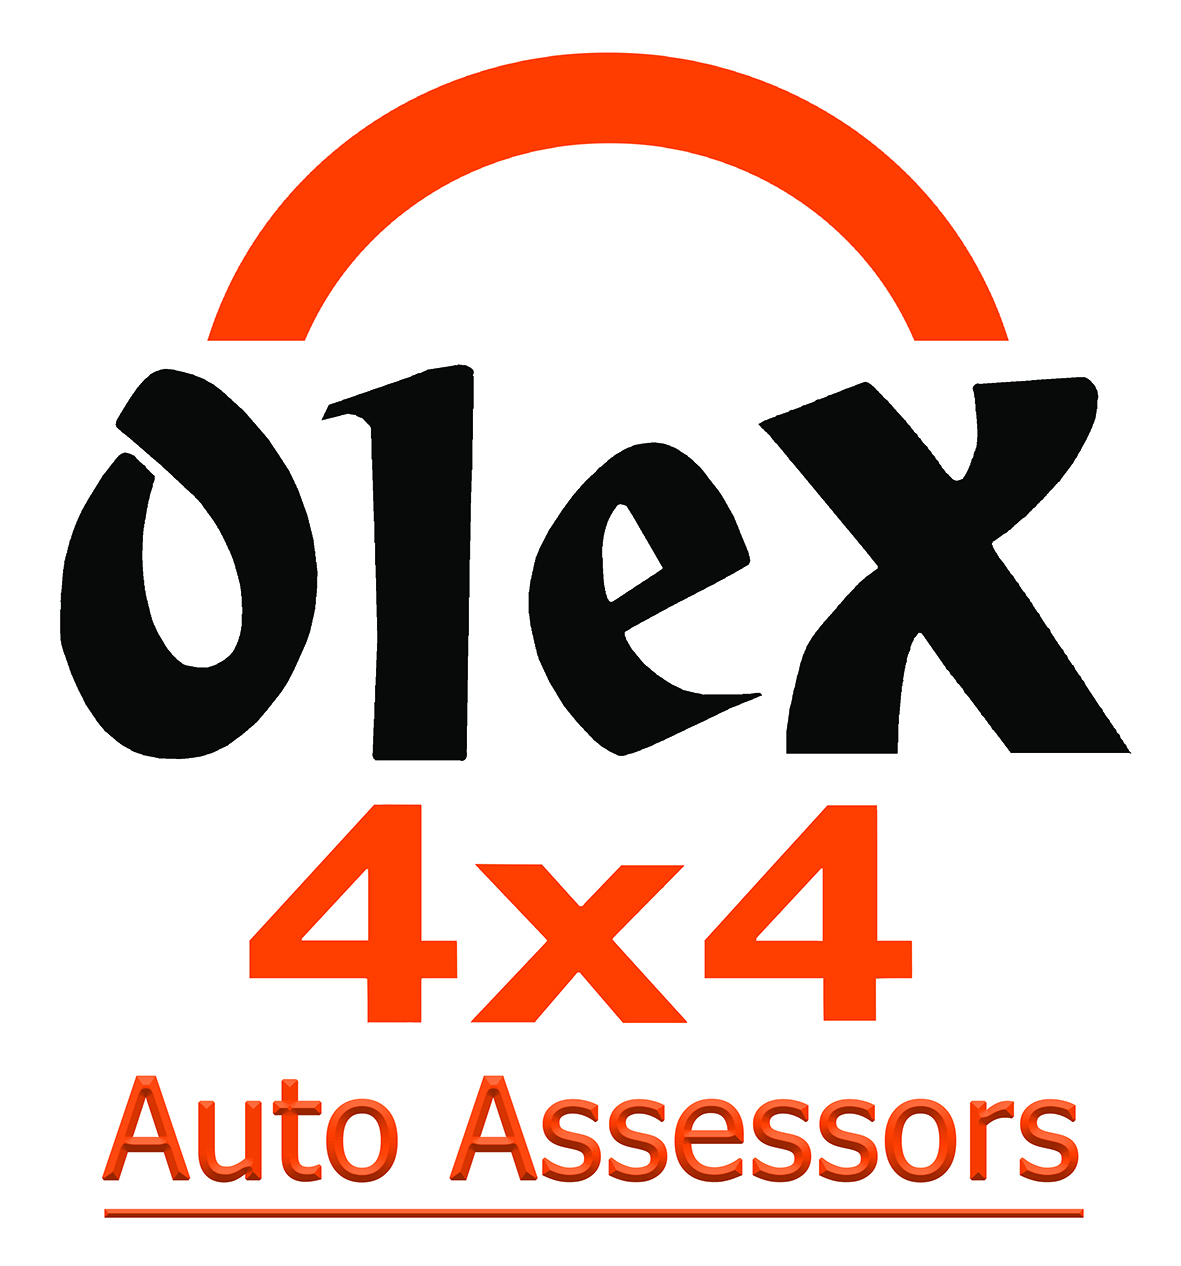 OLEX4X4